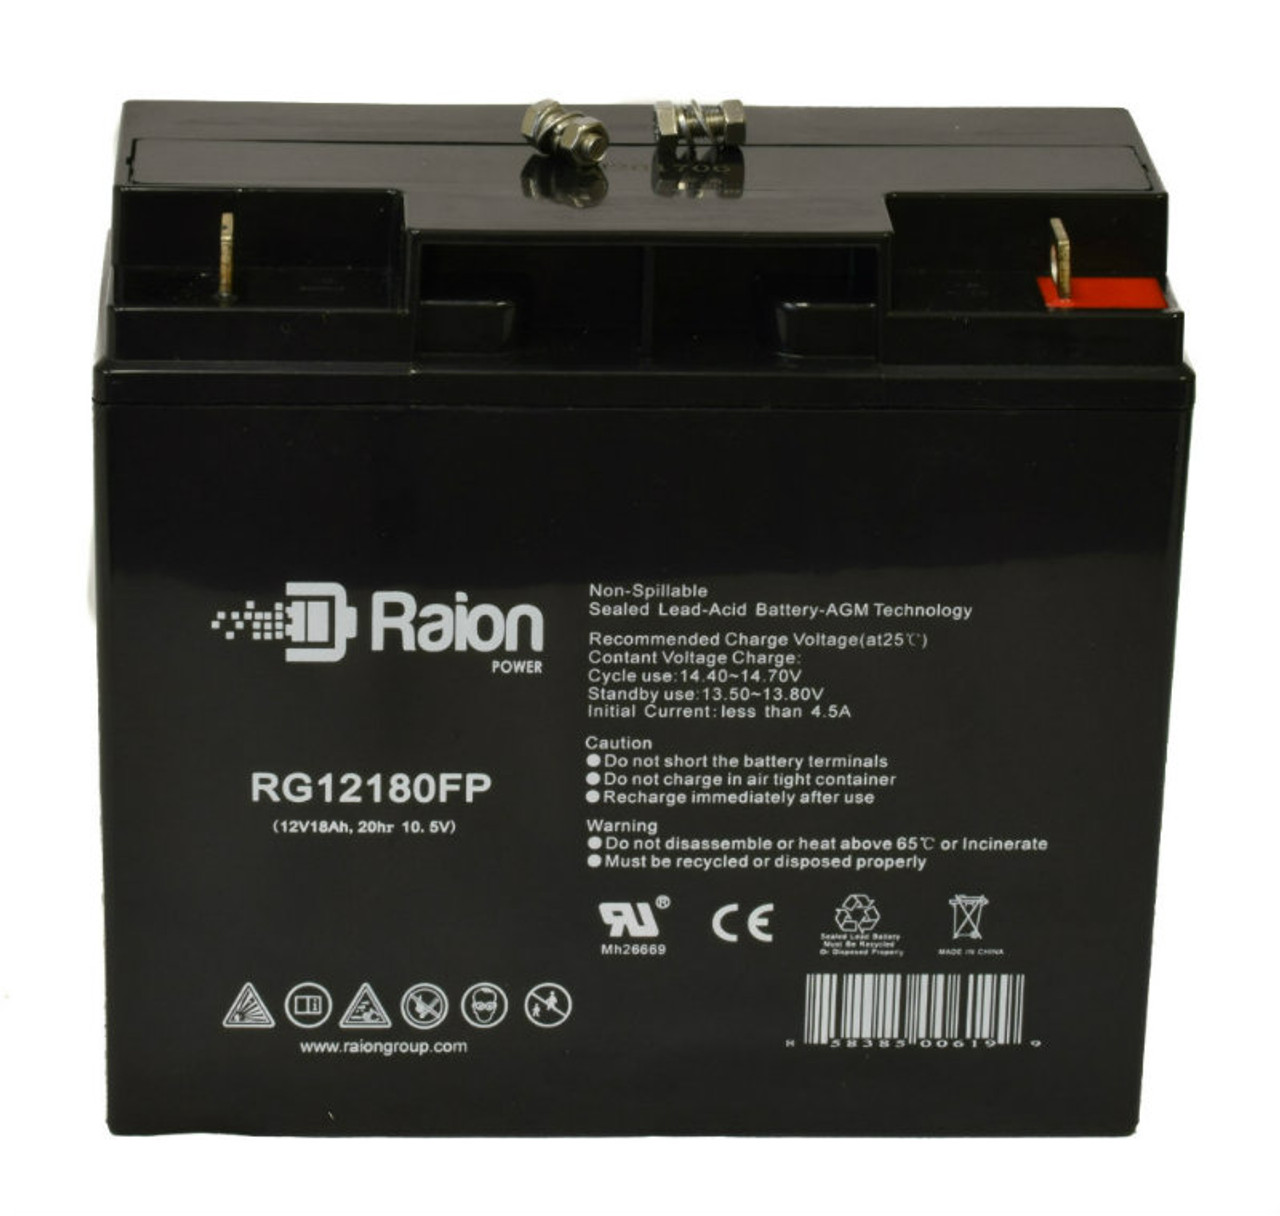 Raion Power RG12180FP 12V 18Ah Lead Acid Battery for Drive Medical Spitfire DST 4-Wheel